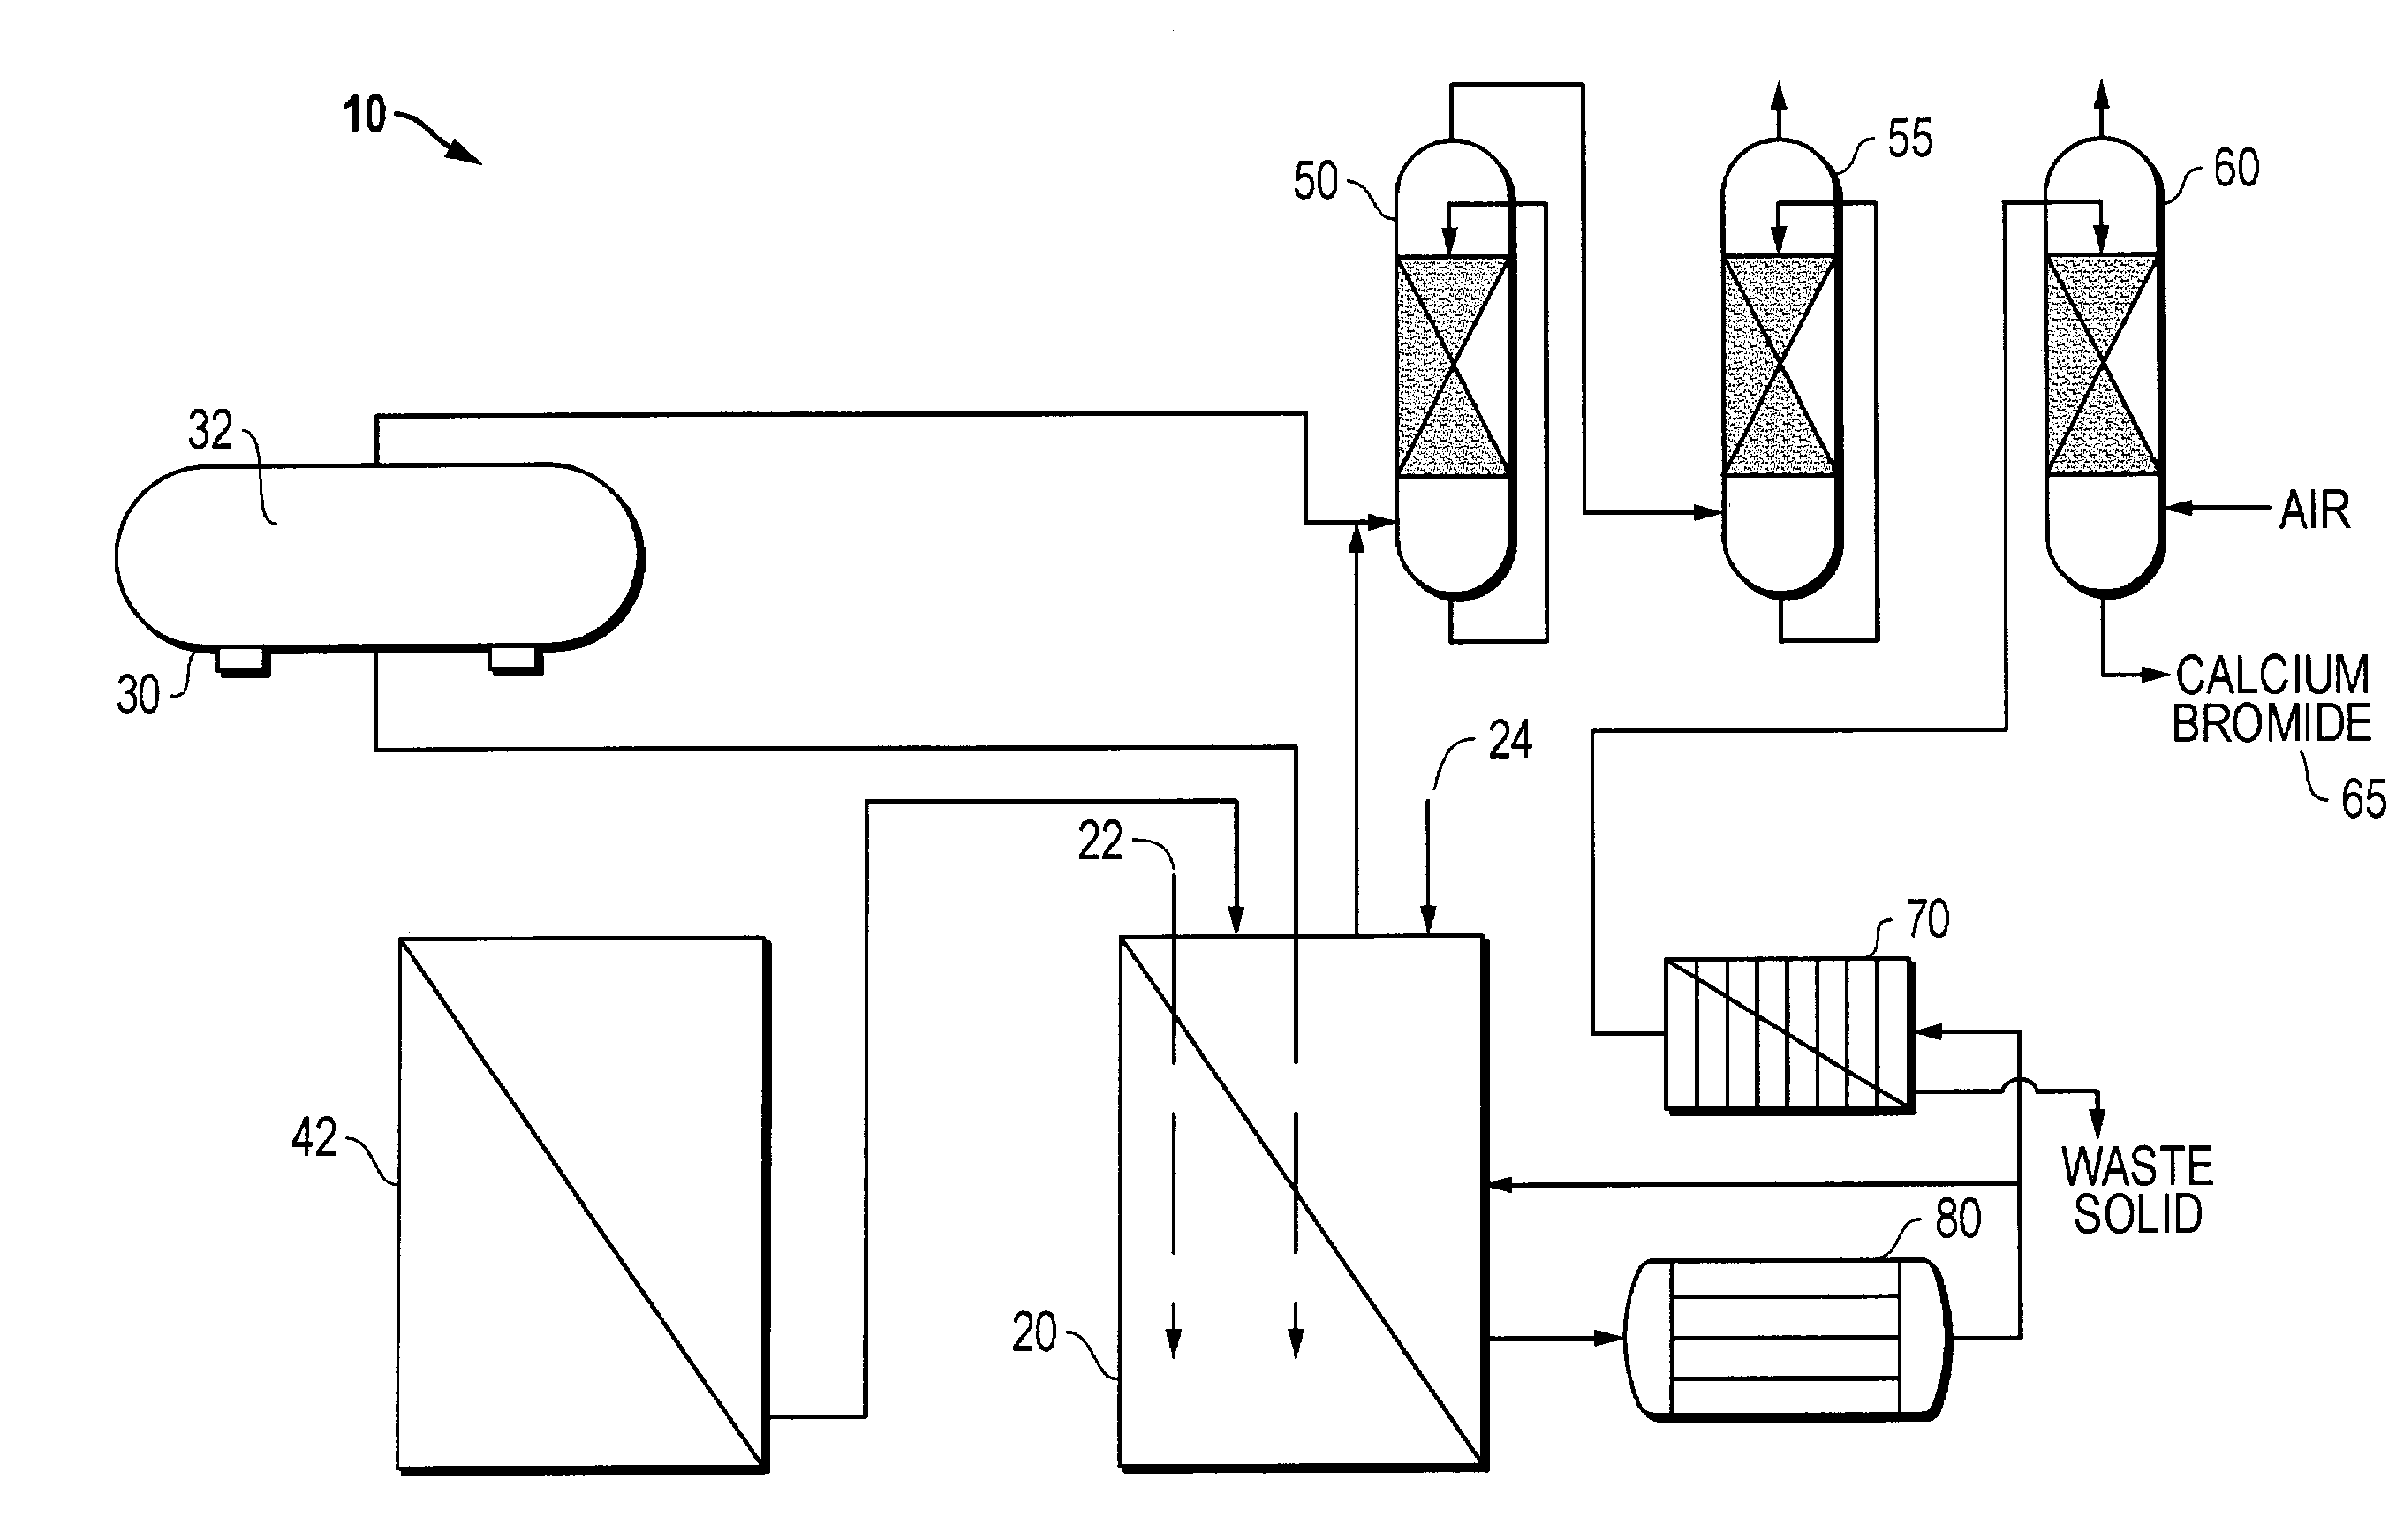 Method for producing a halide brine